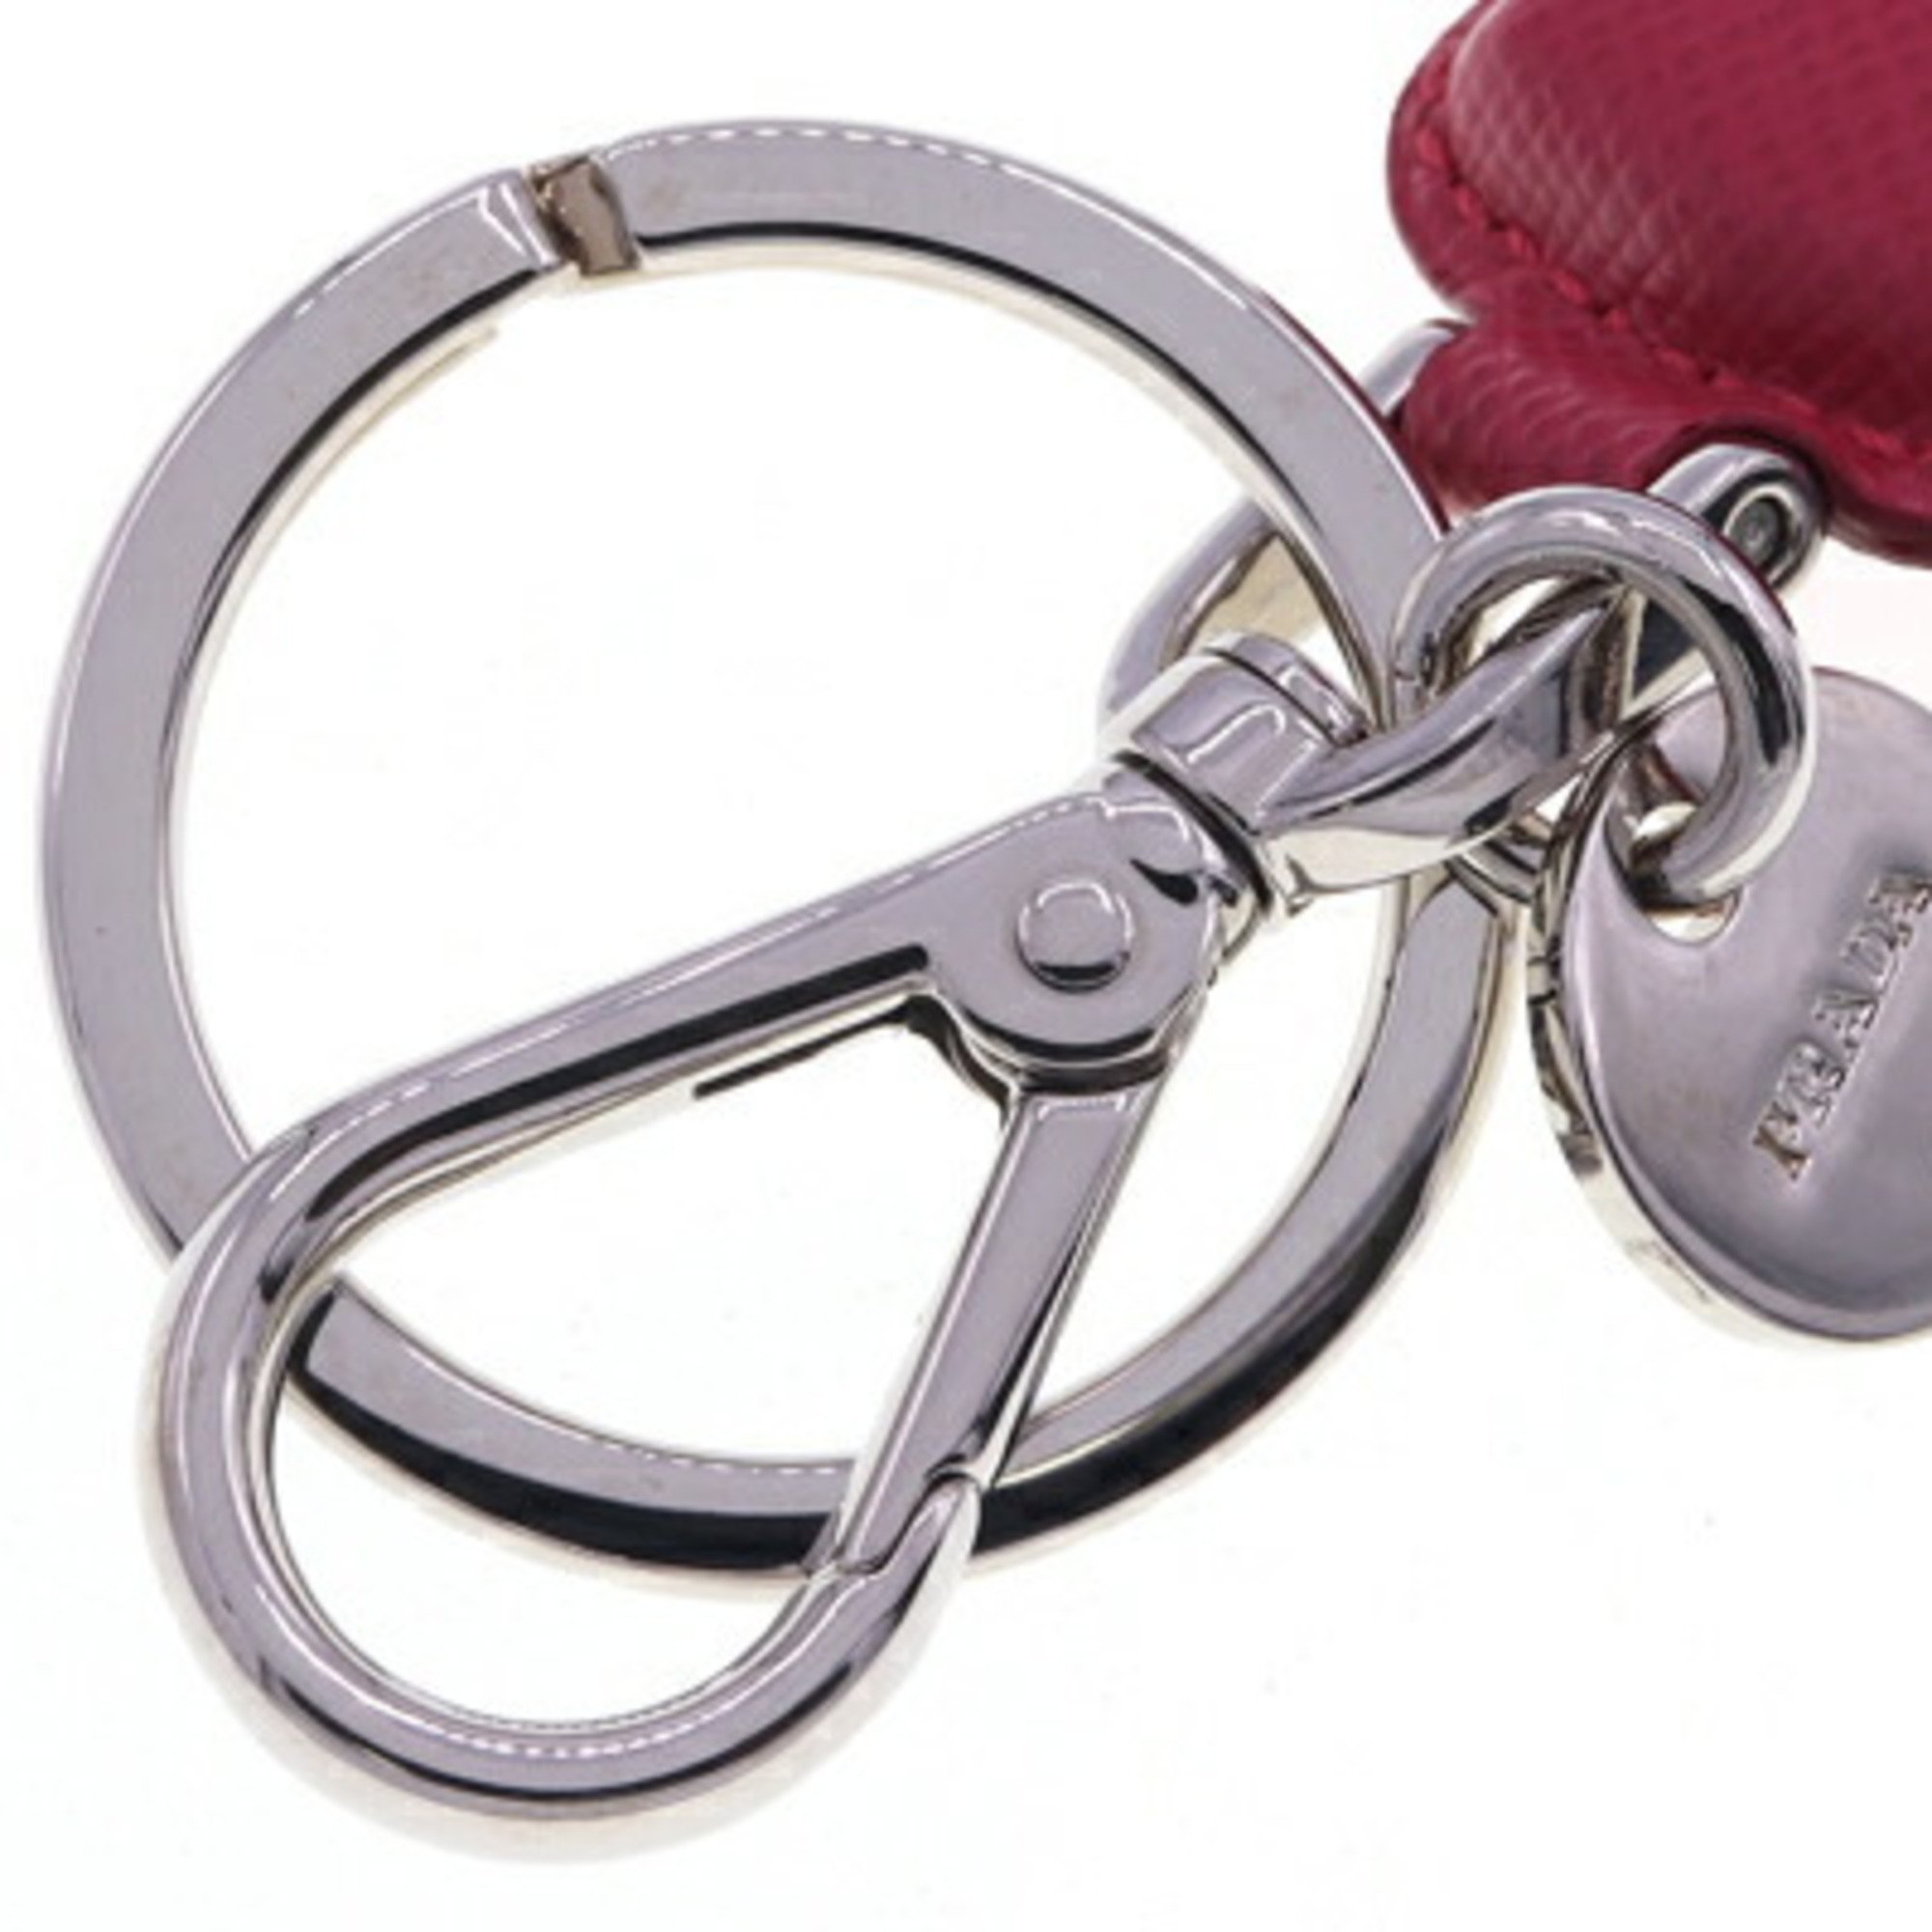 PRADA Keychain USB Memory 2ARA21 Pink Leather 4GB Keyring Bag Charm Ladies